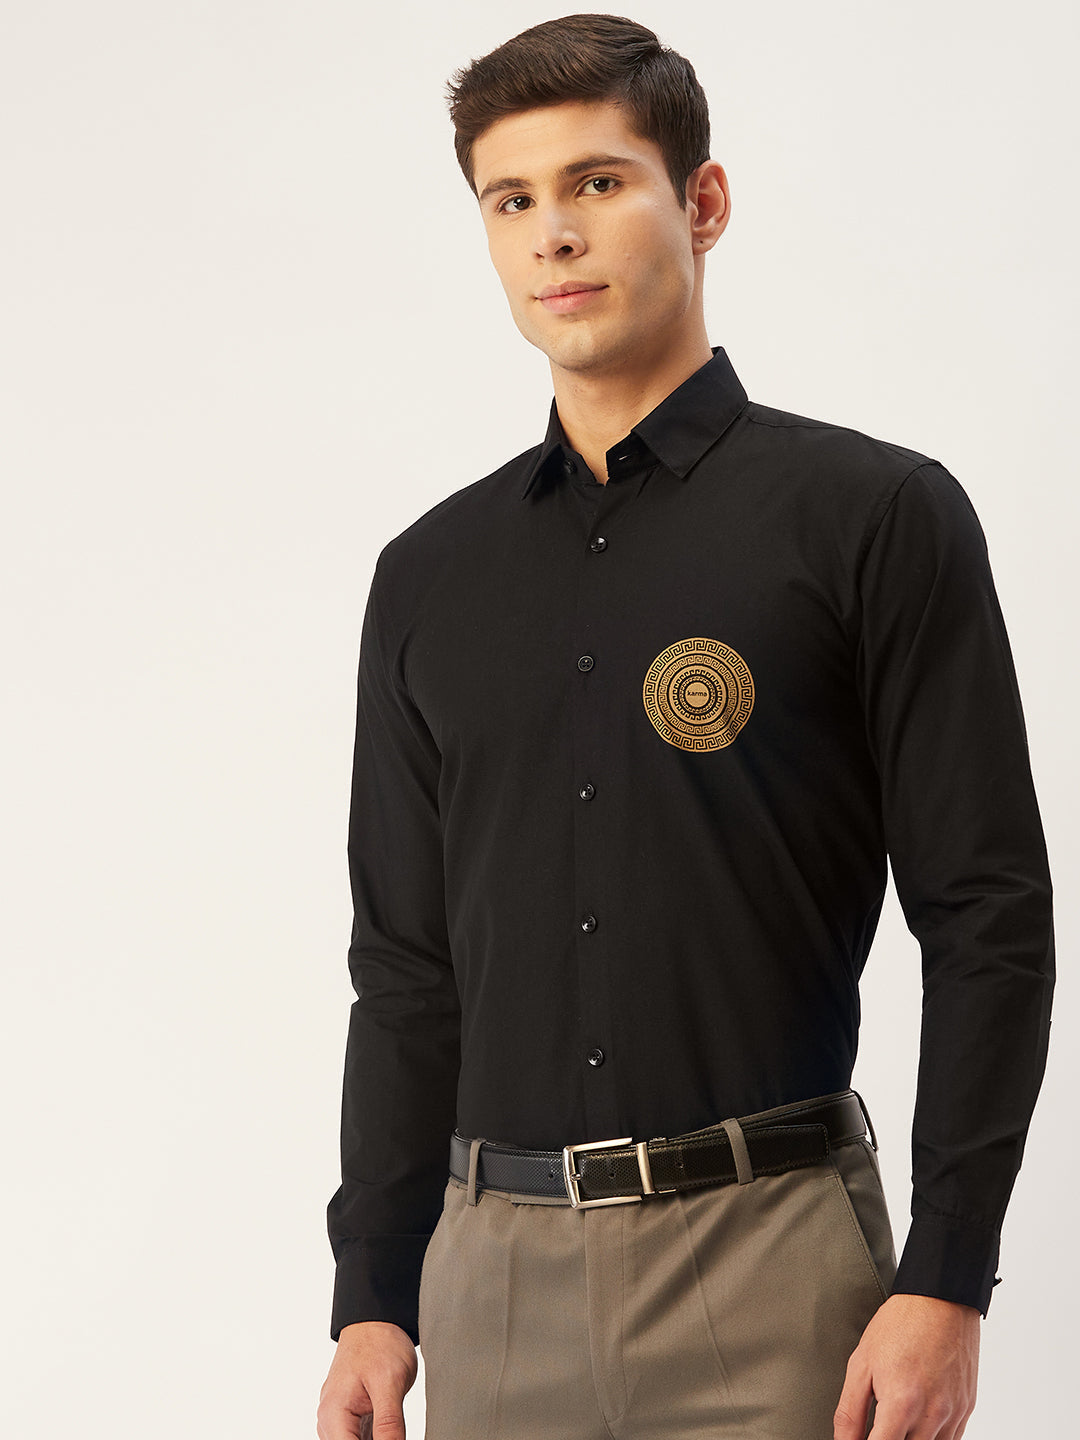 Men's Cotton Printed Formal Shirts ( SF 807Black ) - Jainish